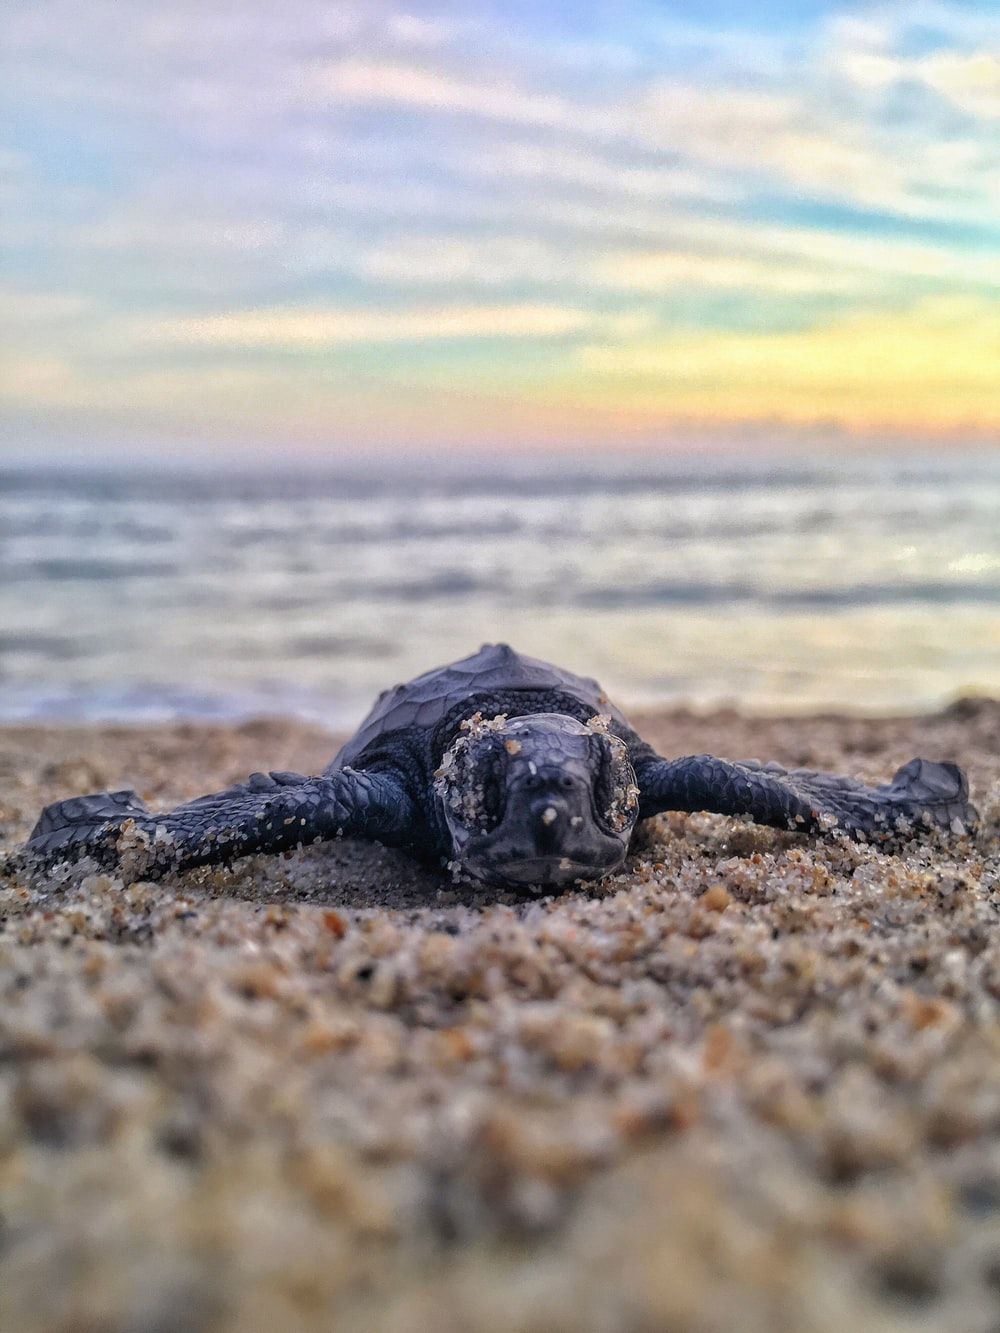 turtle on beach sand photo